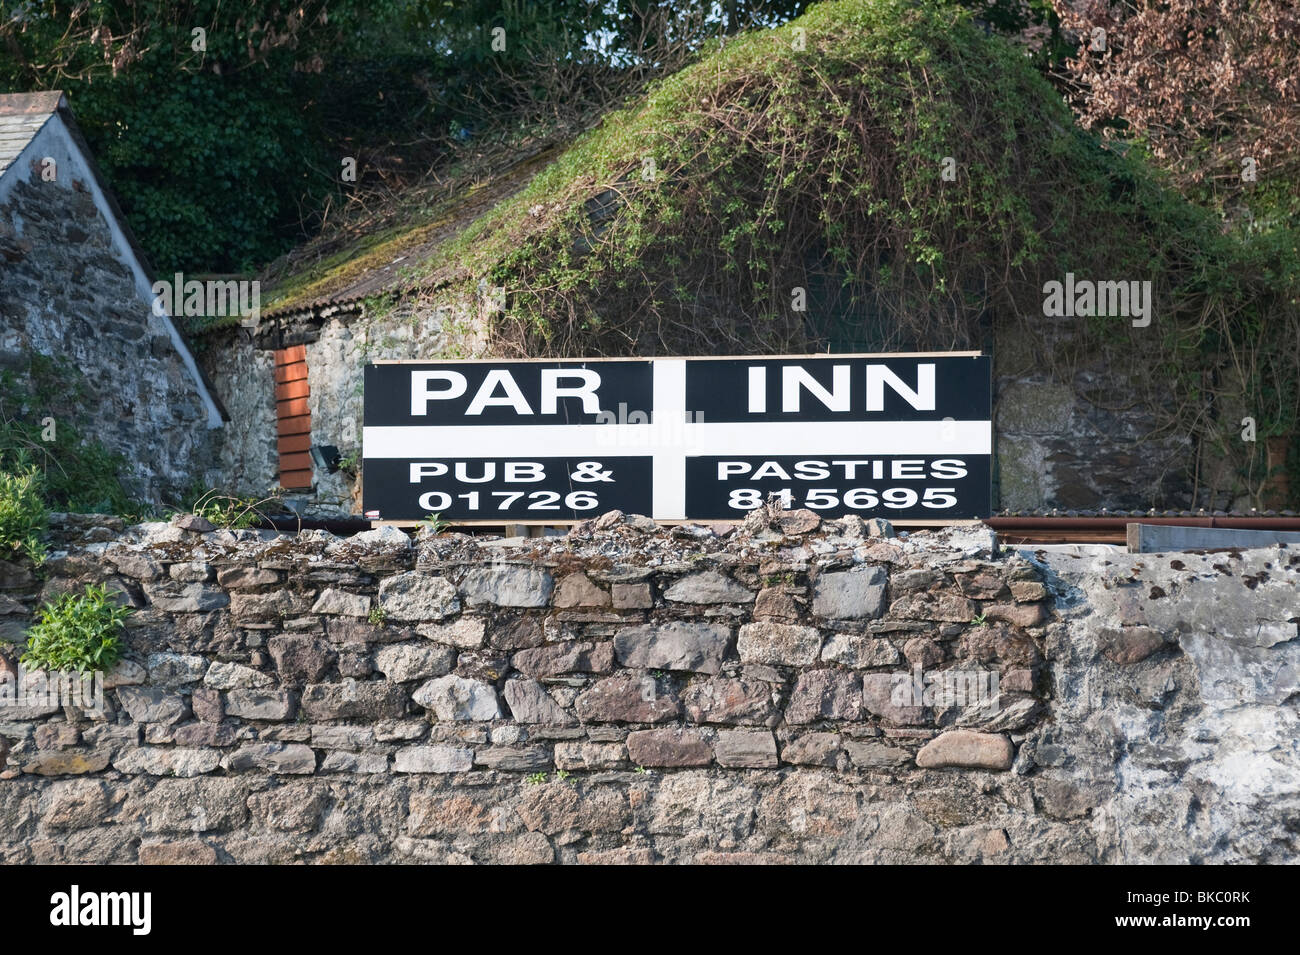 Par Inn pub sign, using Cornish flag design as background. Stock Photo